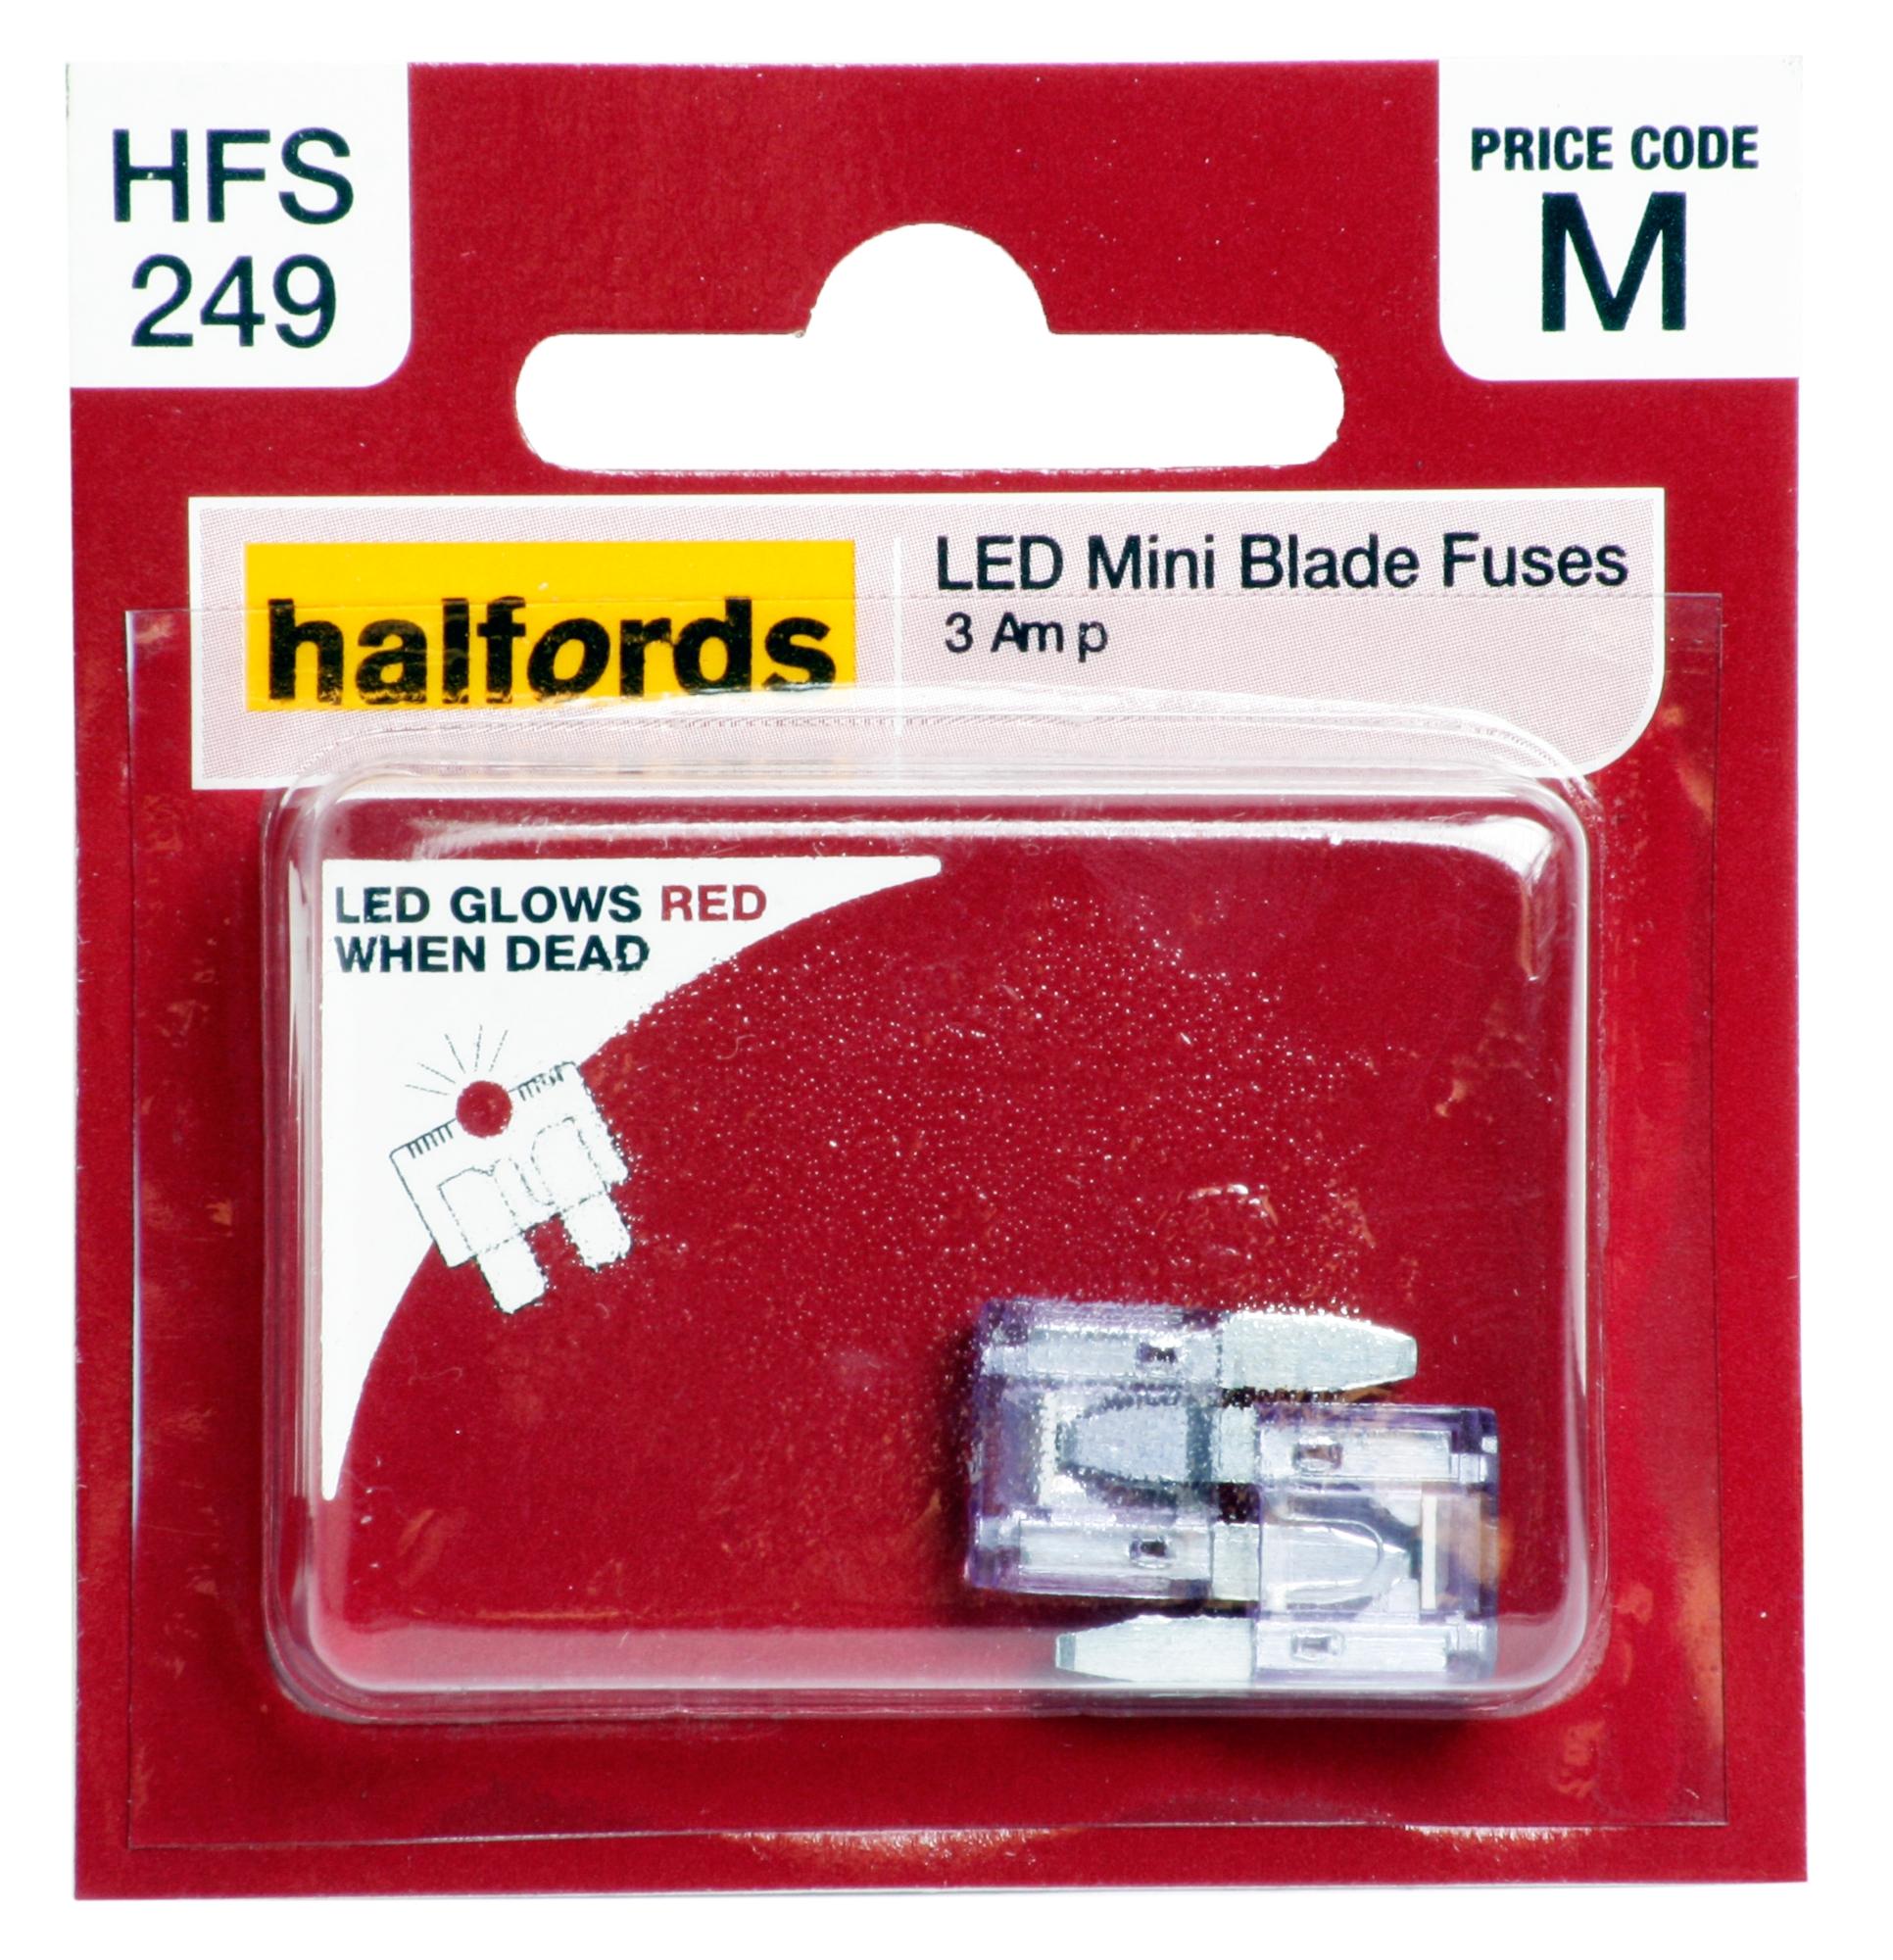 Halfords Led Mini Blade Fuses 3 Amp (Hfs249)